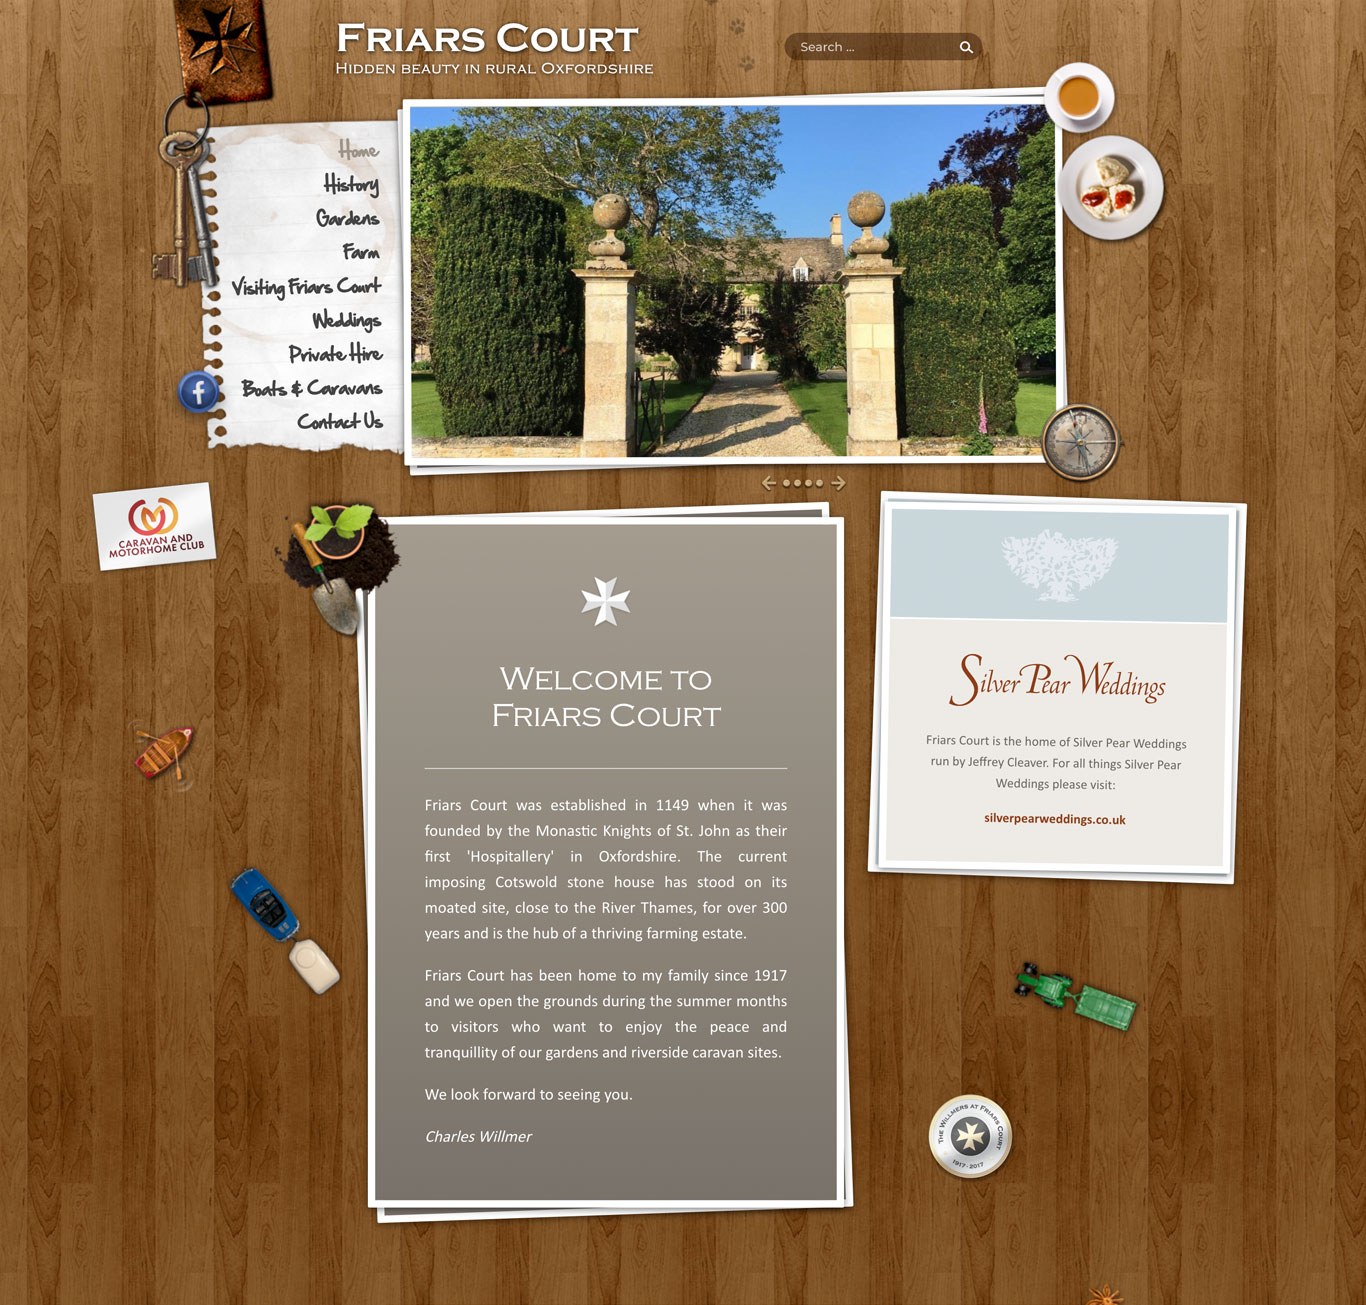 The Friars Court website on desktop